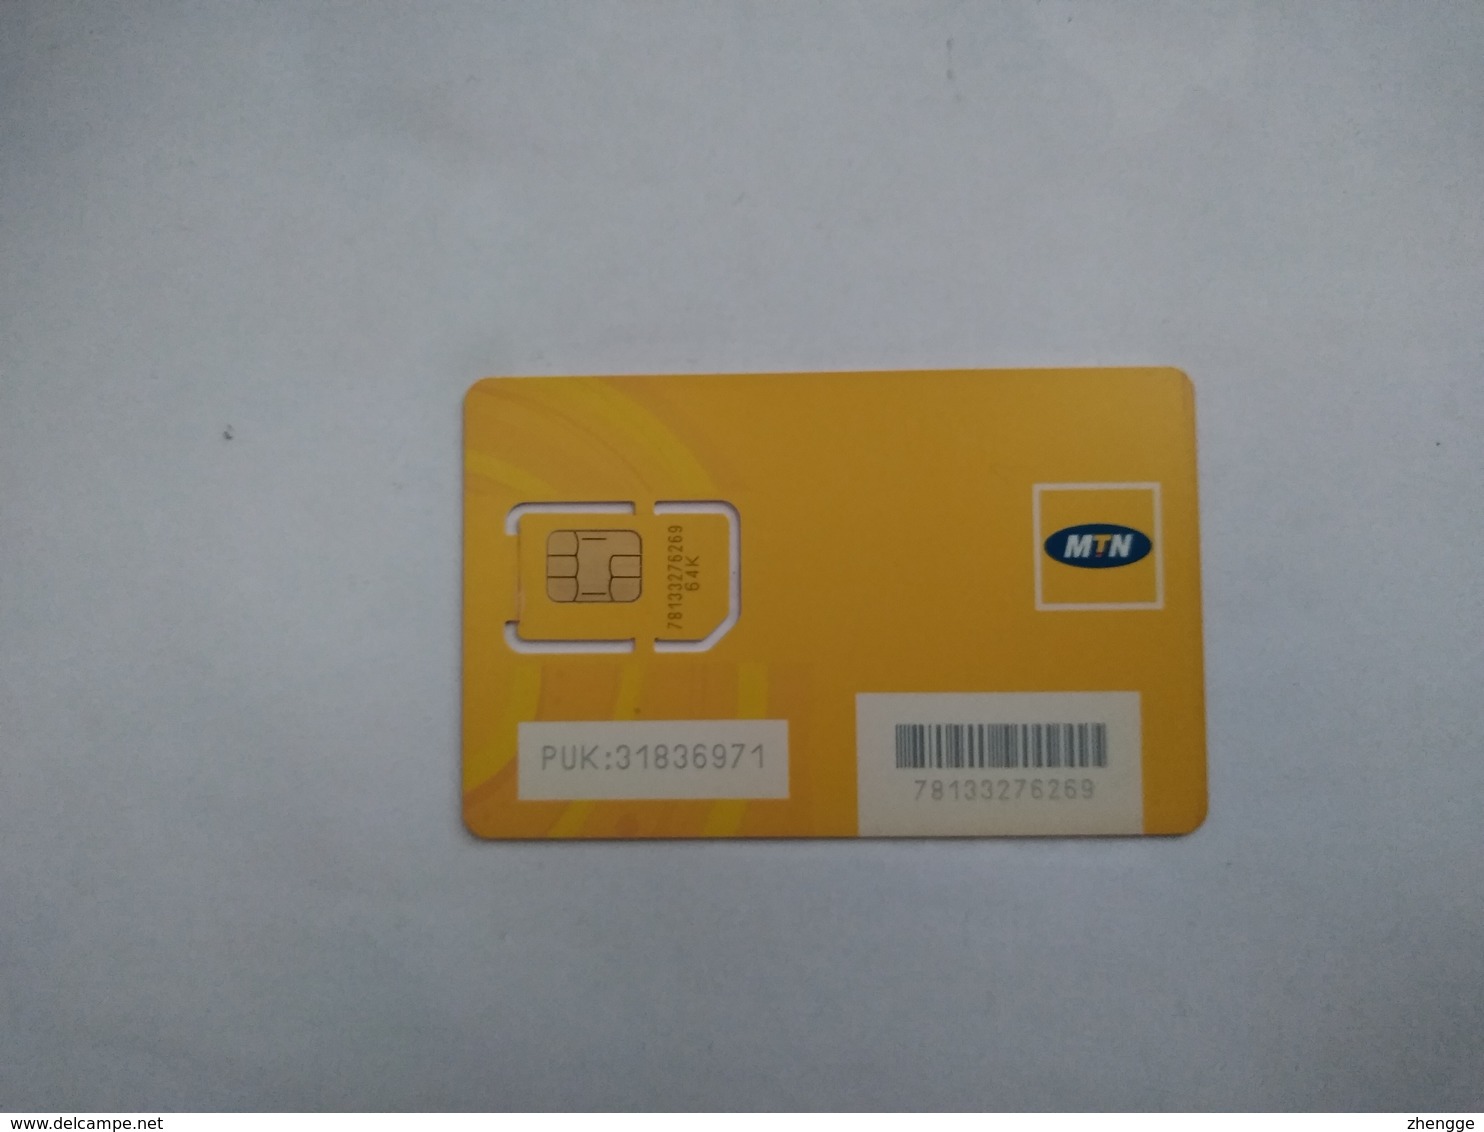 Swaziland GSM SIM Cards, (1pcs, Used) - Swaziland